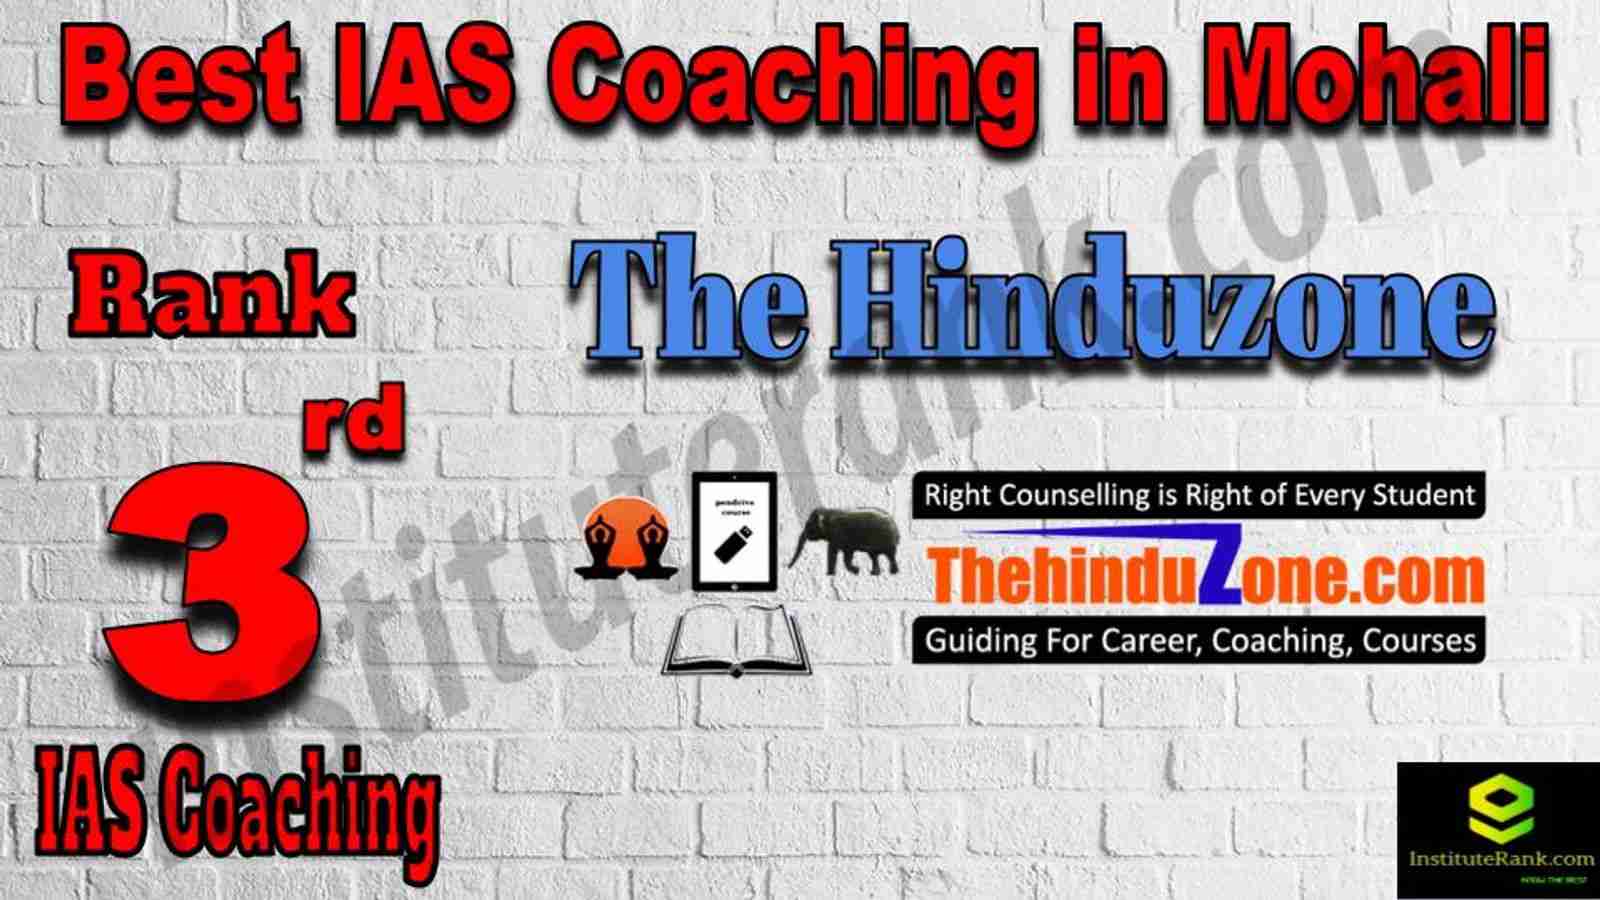 3rd Best IAS Coaching in Mohali